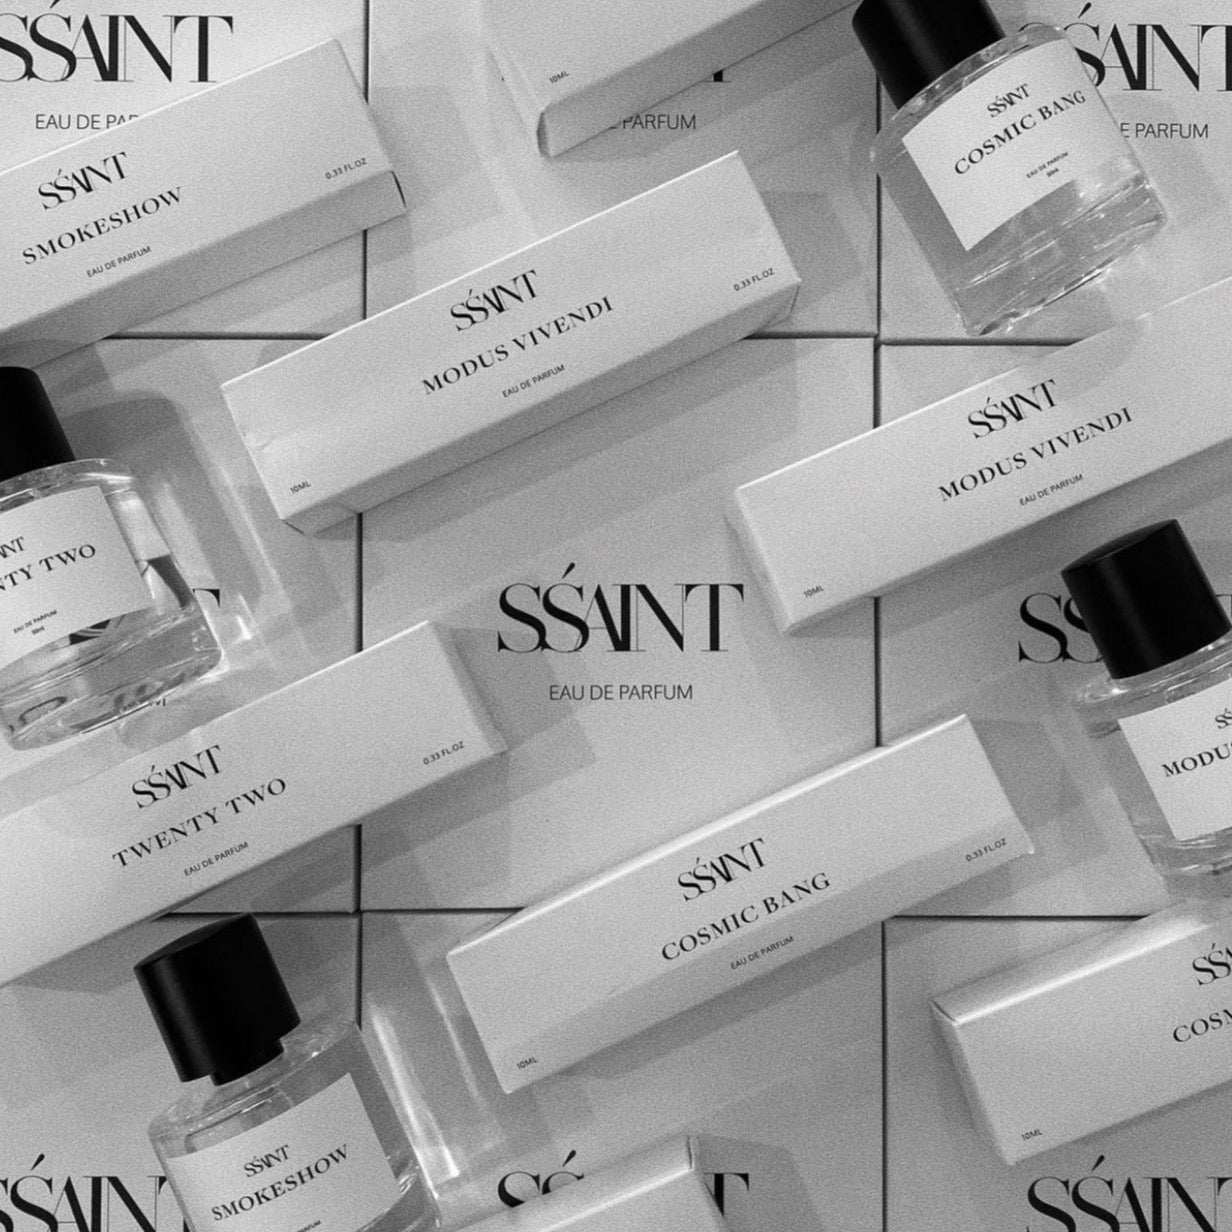 ssaint parfum. by Ssaint